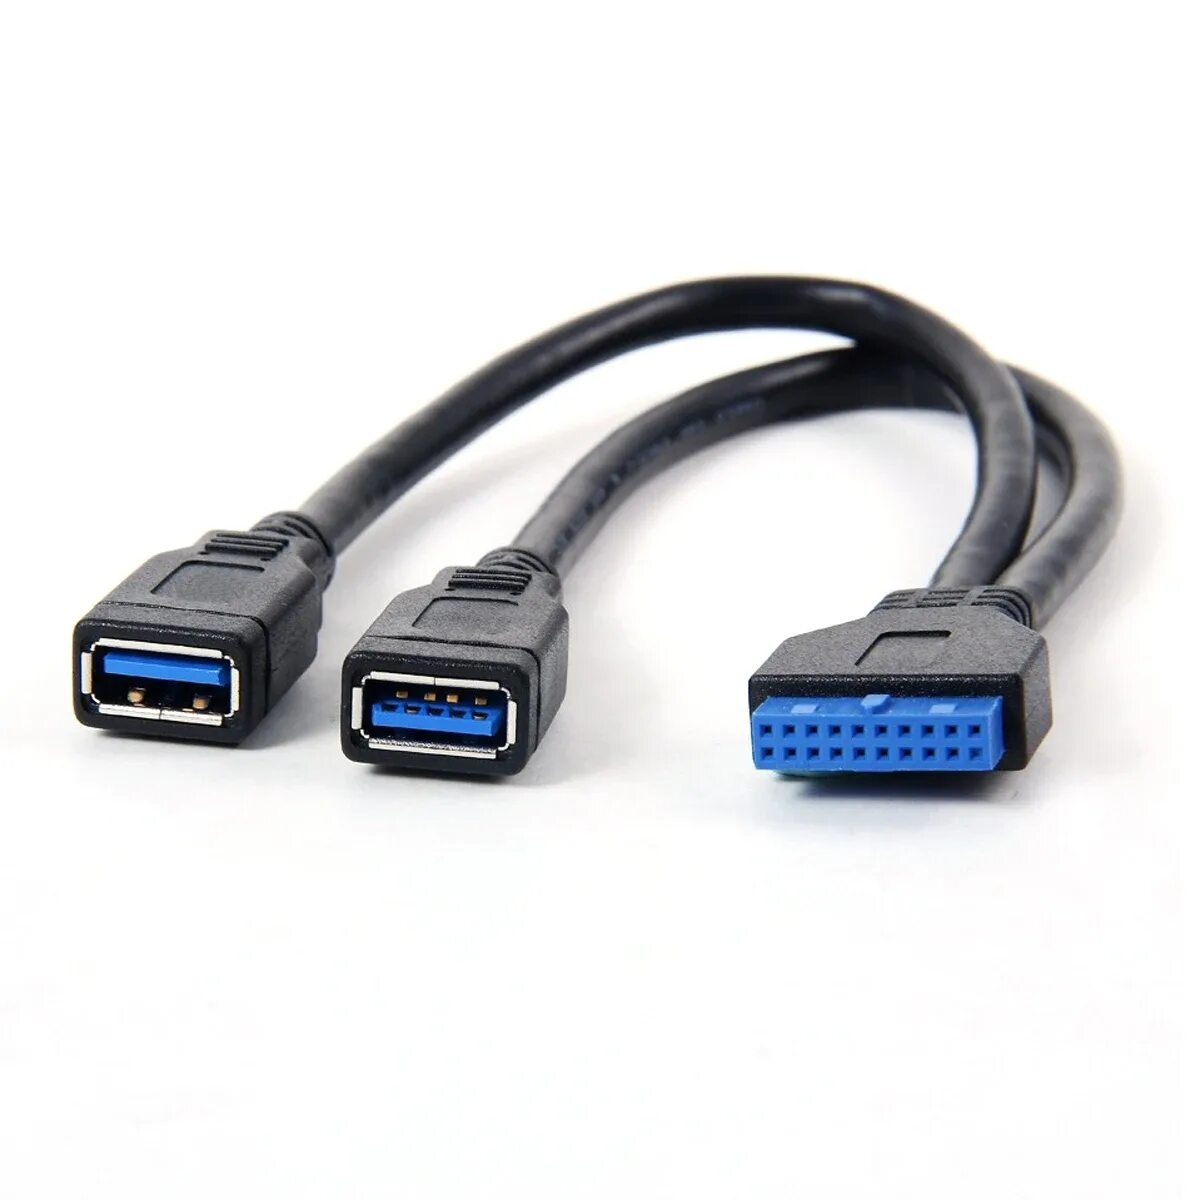 Переходник usb 3.0 купить. USB3.0 19pin 20pin. Штекер USB 3.0 20 Pin. Кабель USB 3.0 для материнской платы 20 Pin. USB 3.0 20-1 кабель-переходник.